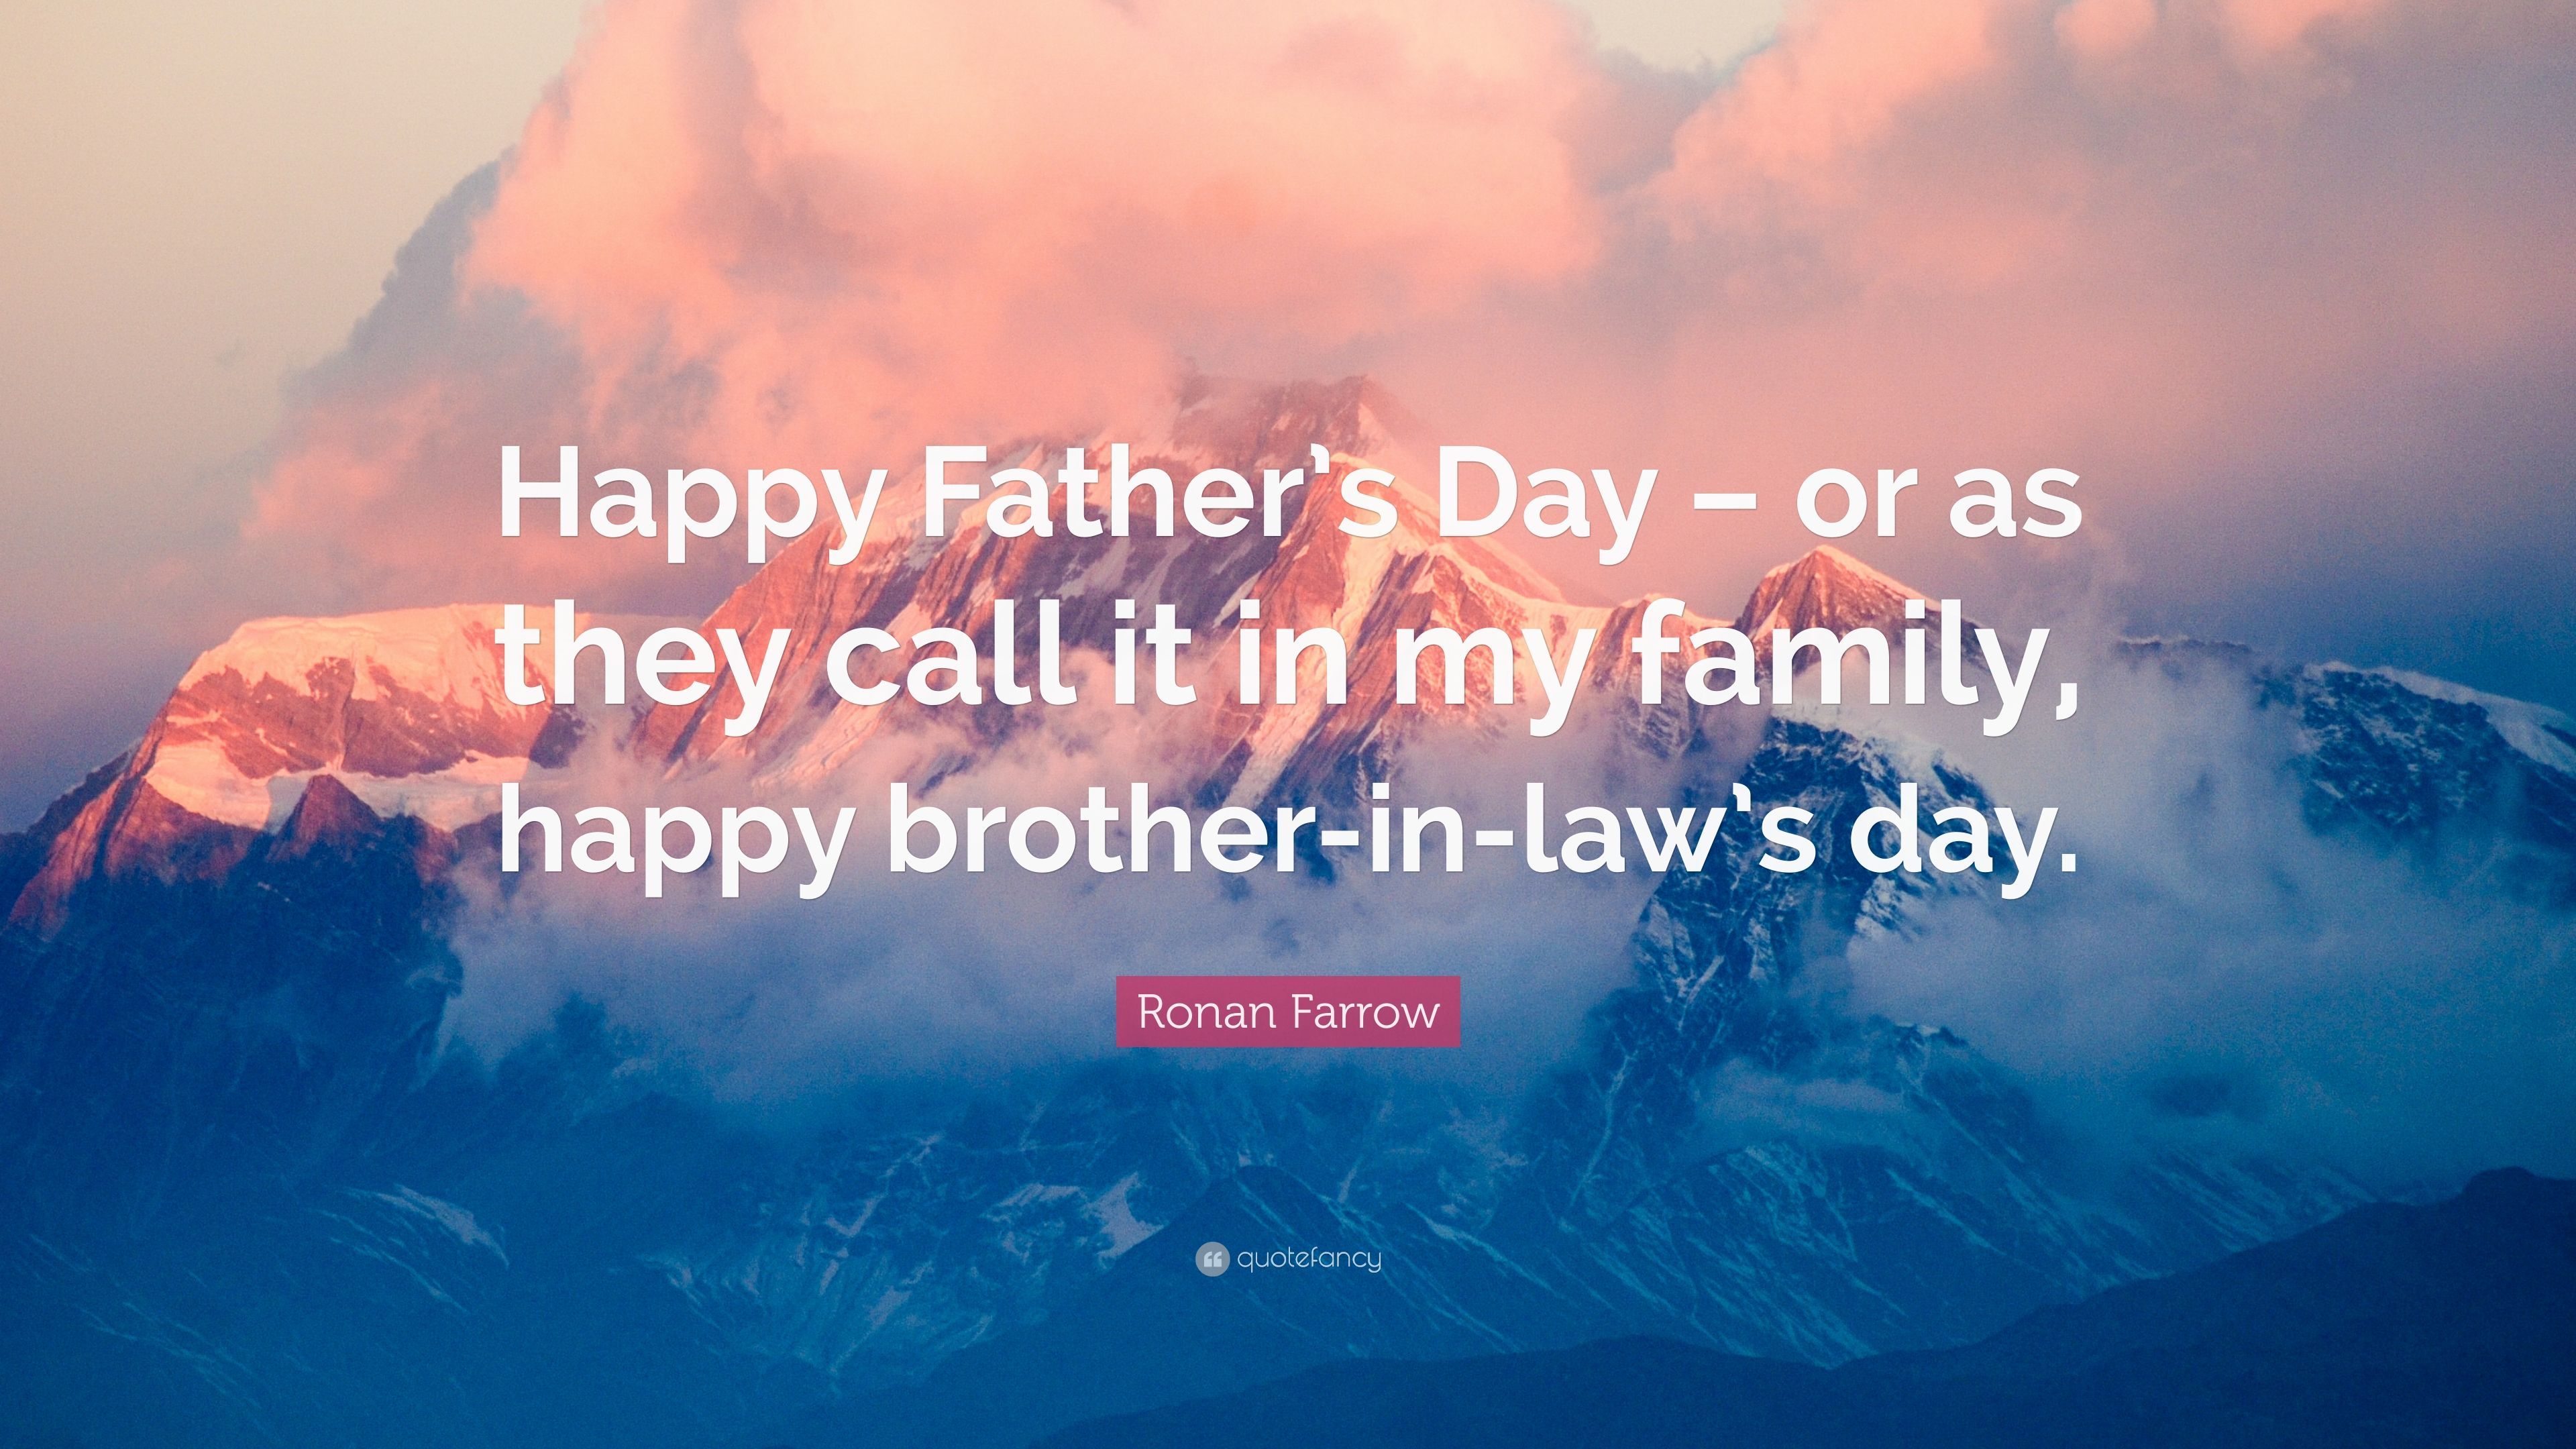 Ronan Farrow Quote: “Happy Father's Day